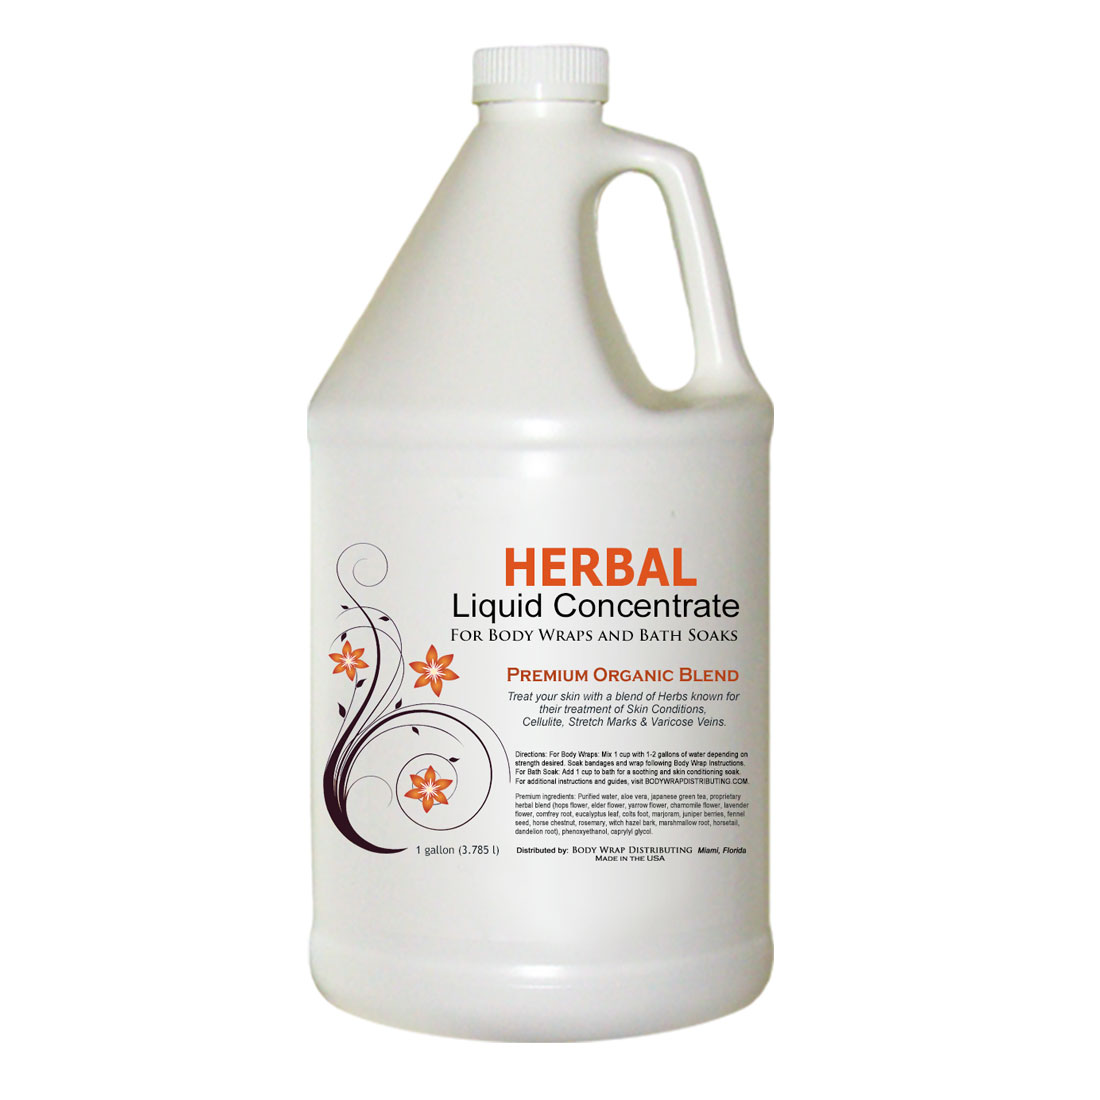 Herbal Body Wrapsbodywrapdistributing Comproductherbal